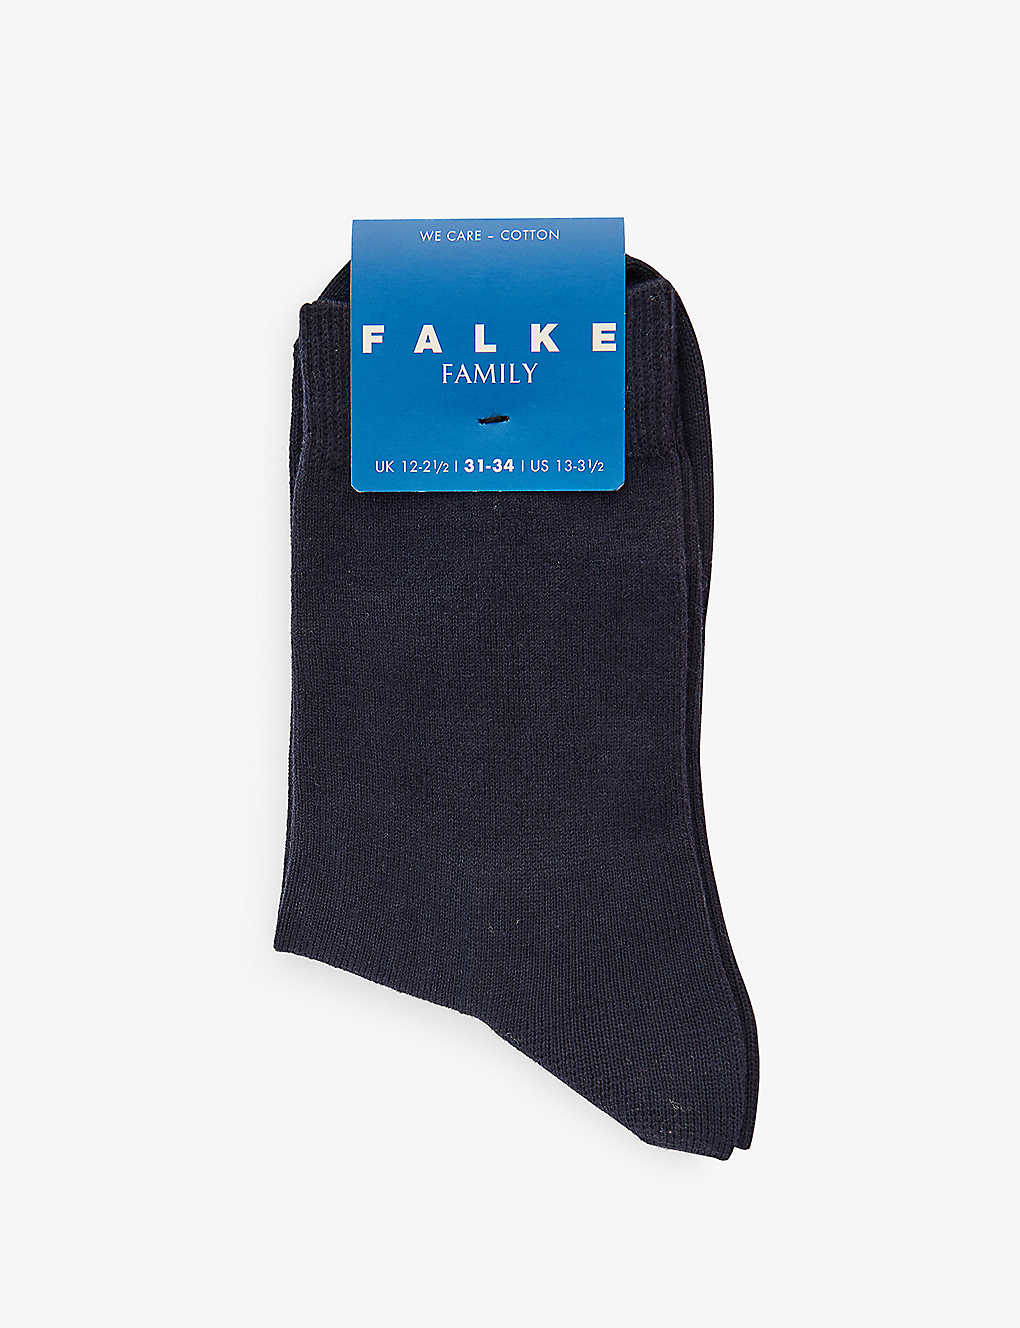 Falke Boys Darkmarine Kids Family So Logo-print Stretch-cotton Blend Socks 2-13 Years